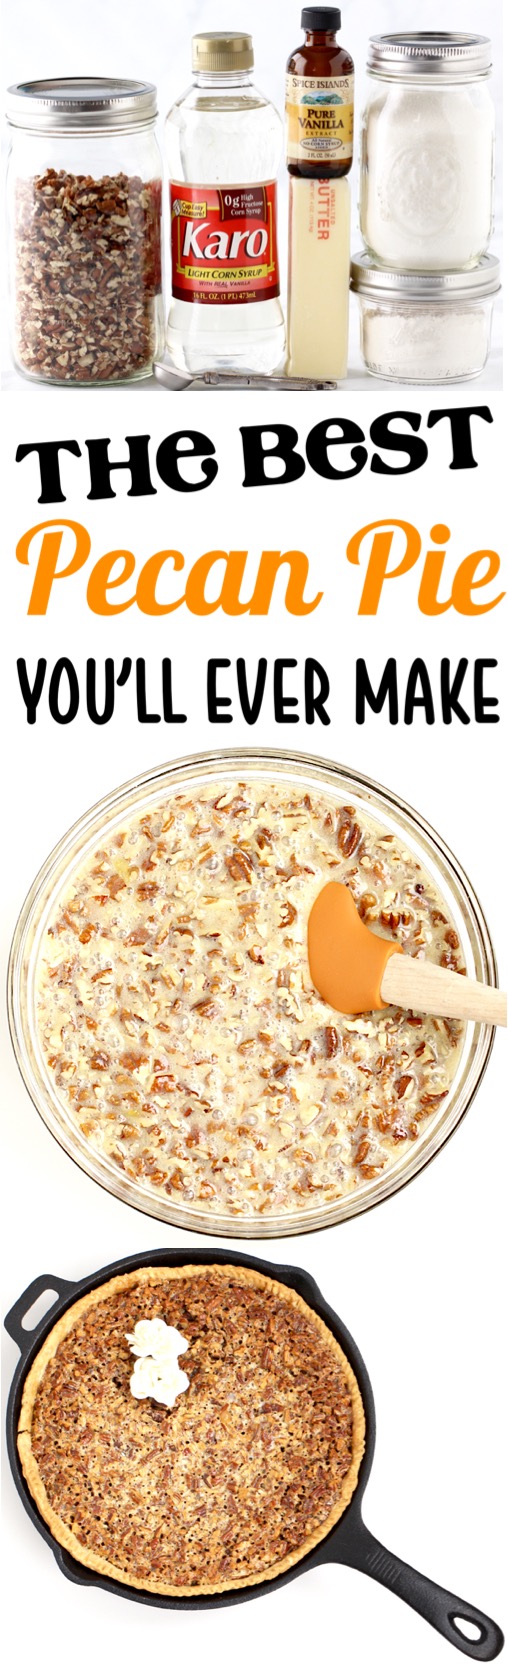 Easy Pecan Pie Recipe Simple Homemade Skillet Pies